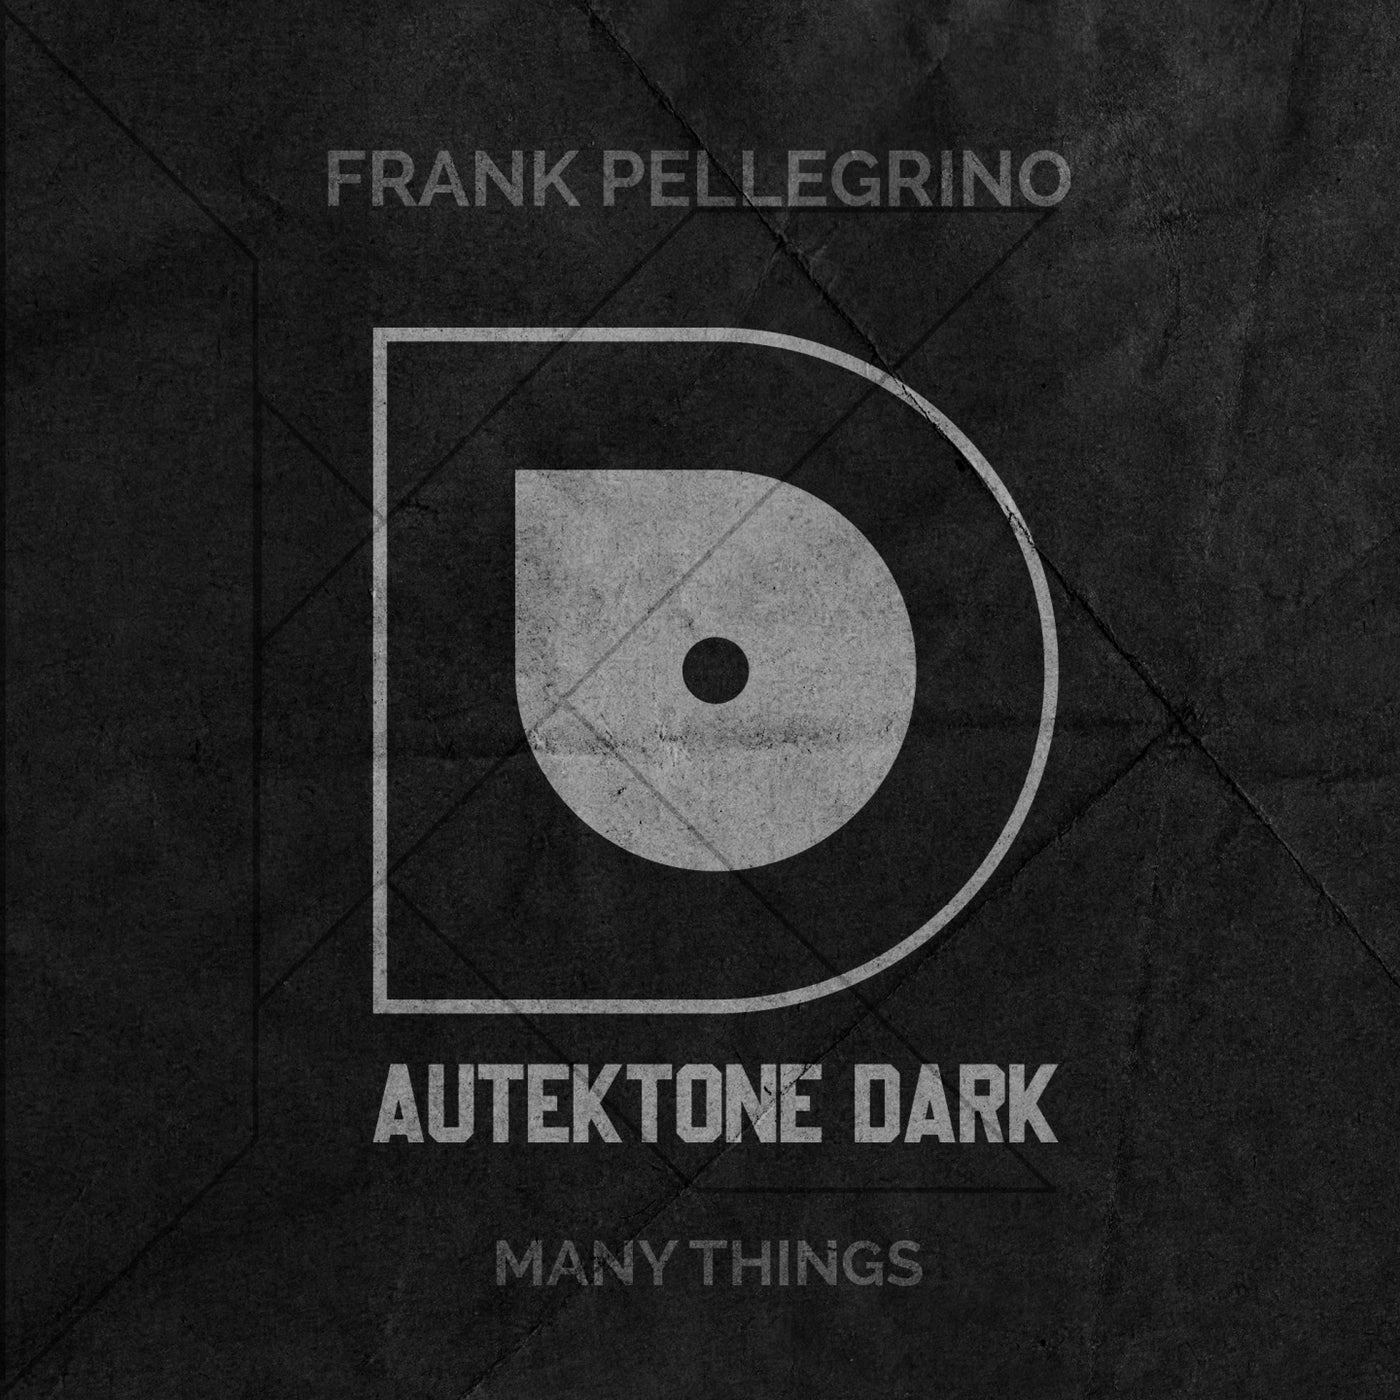 Frank Pellegrino - Many Things [AUTEKTONE DARK]